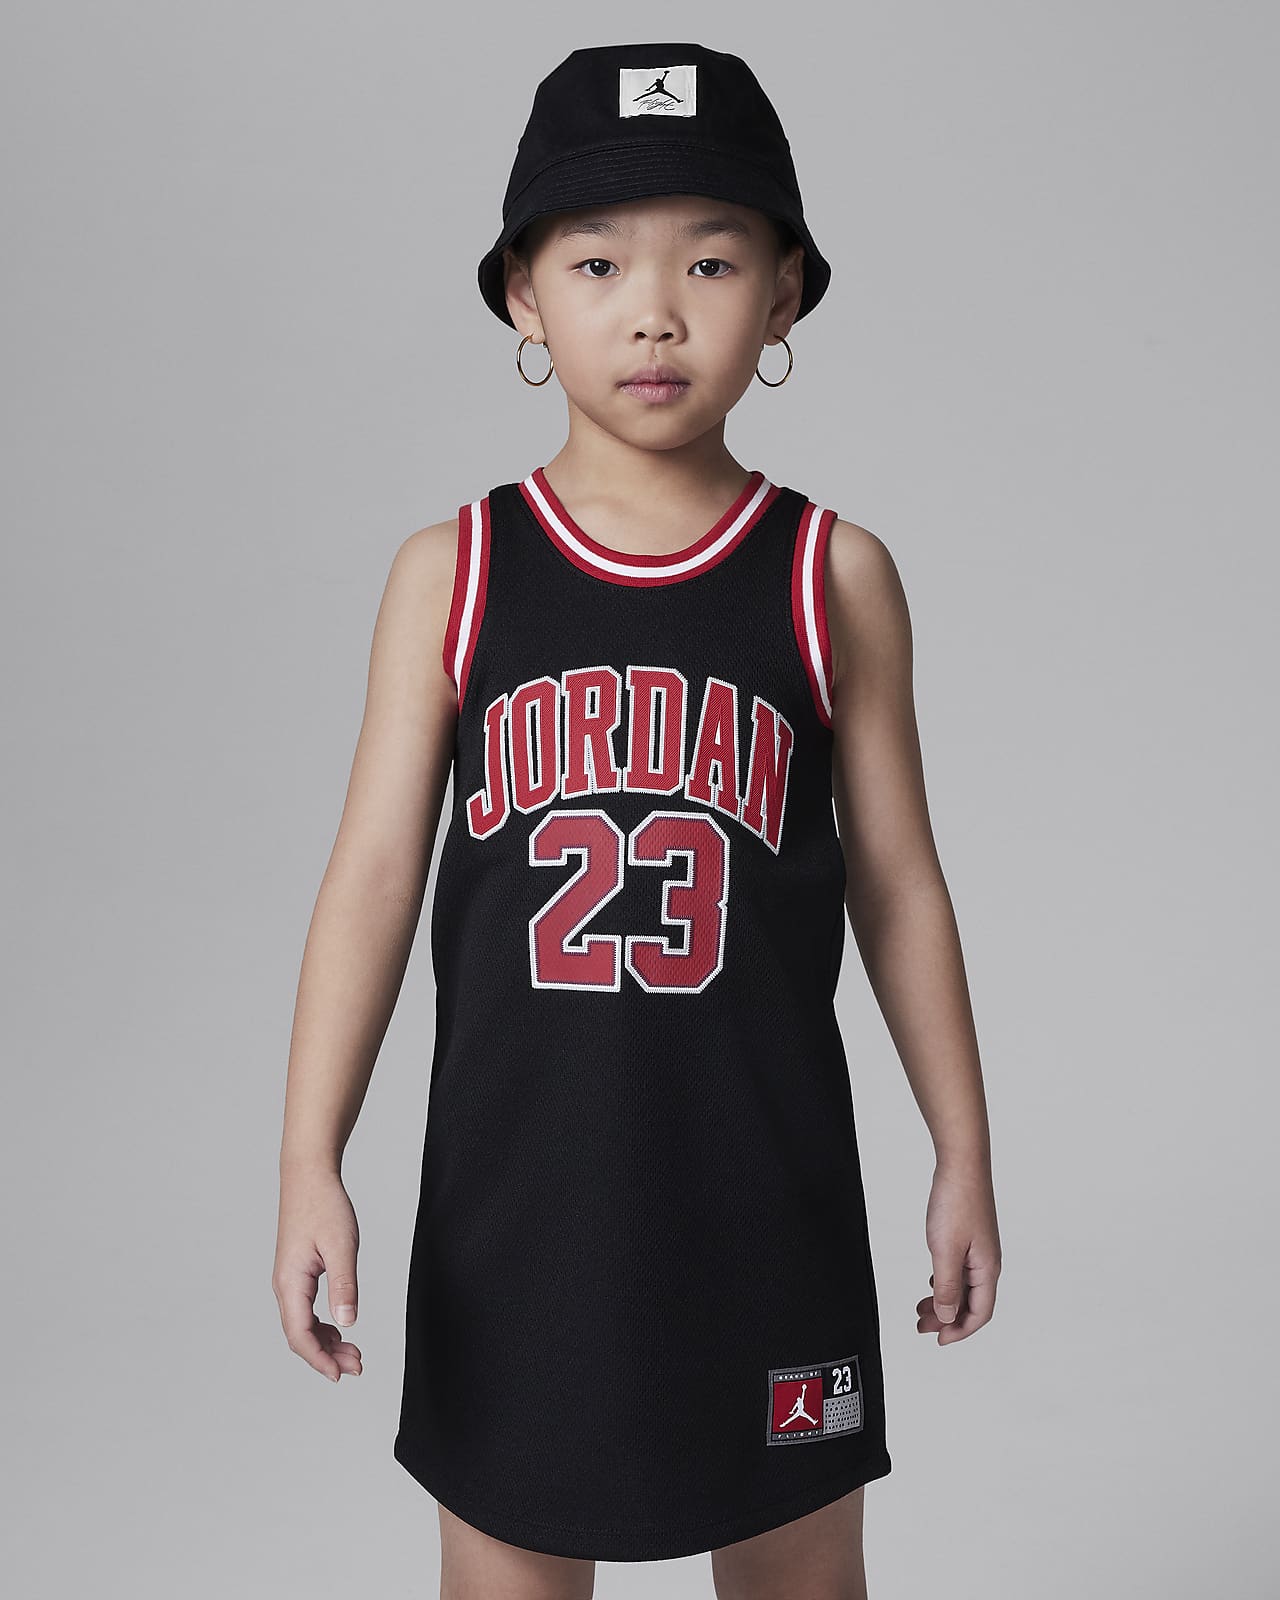 Vestido Jordan 23 Jersey para criança